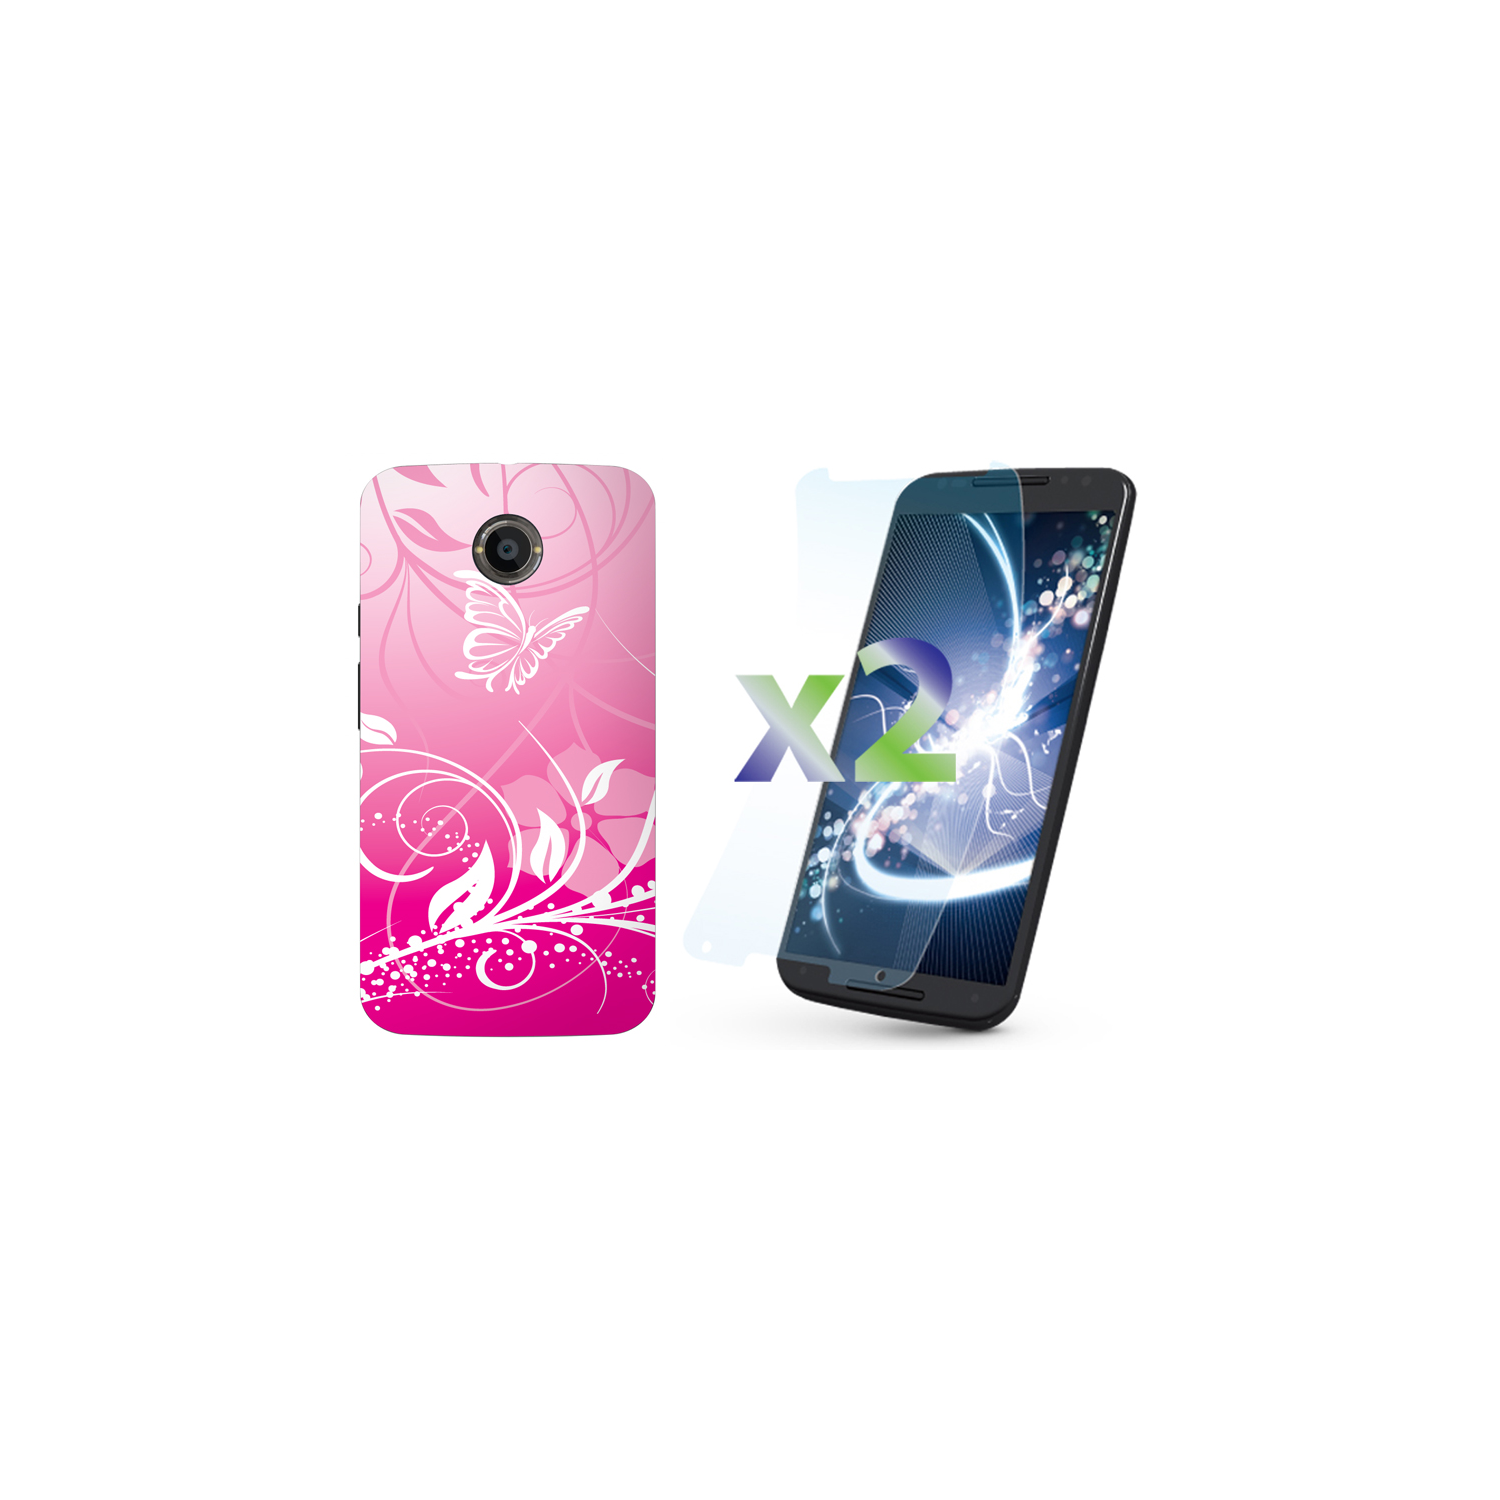 Exian Motorola Moto X2(2nd Gen) Screen Protectors X 2 and TPU Case Exian Design Flower & Butterfly Pink